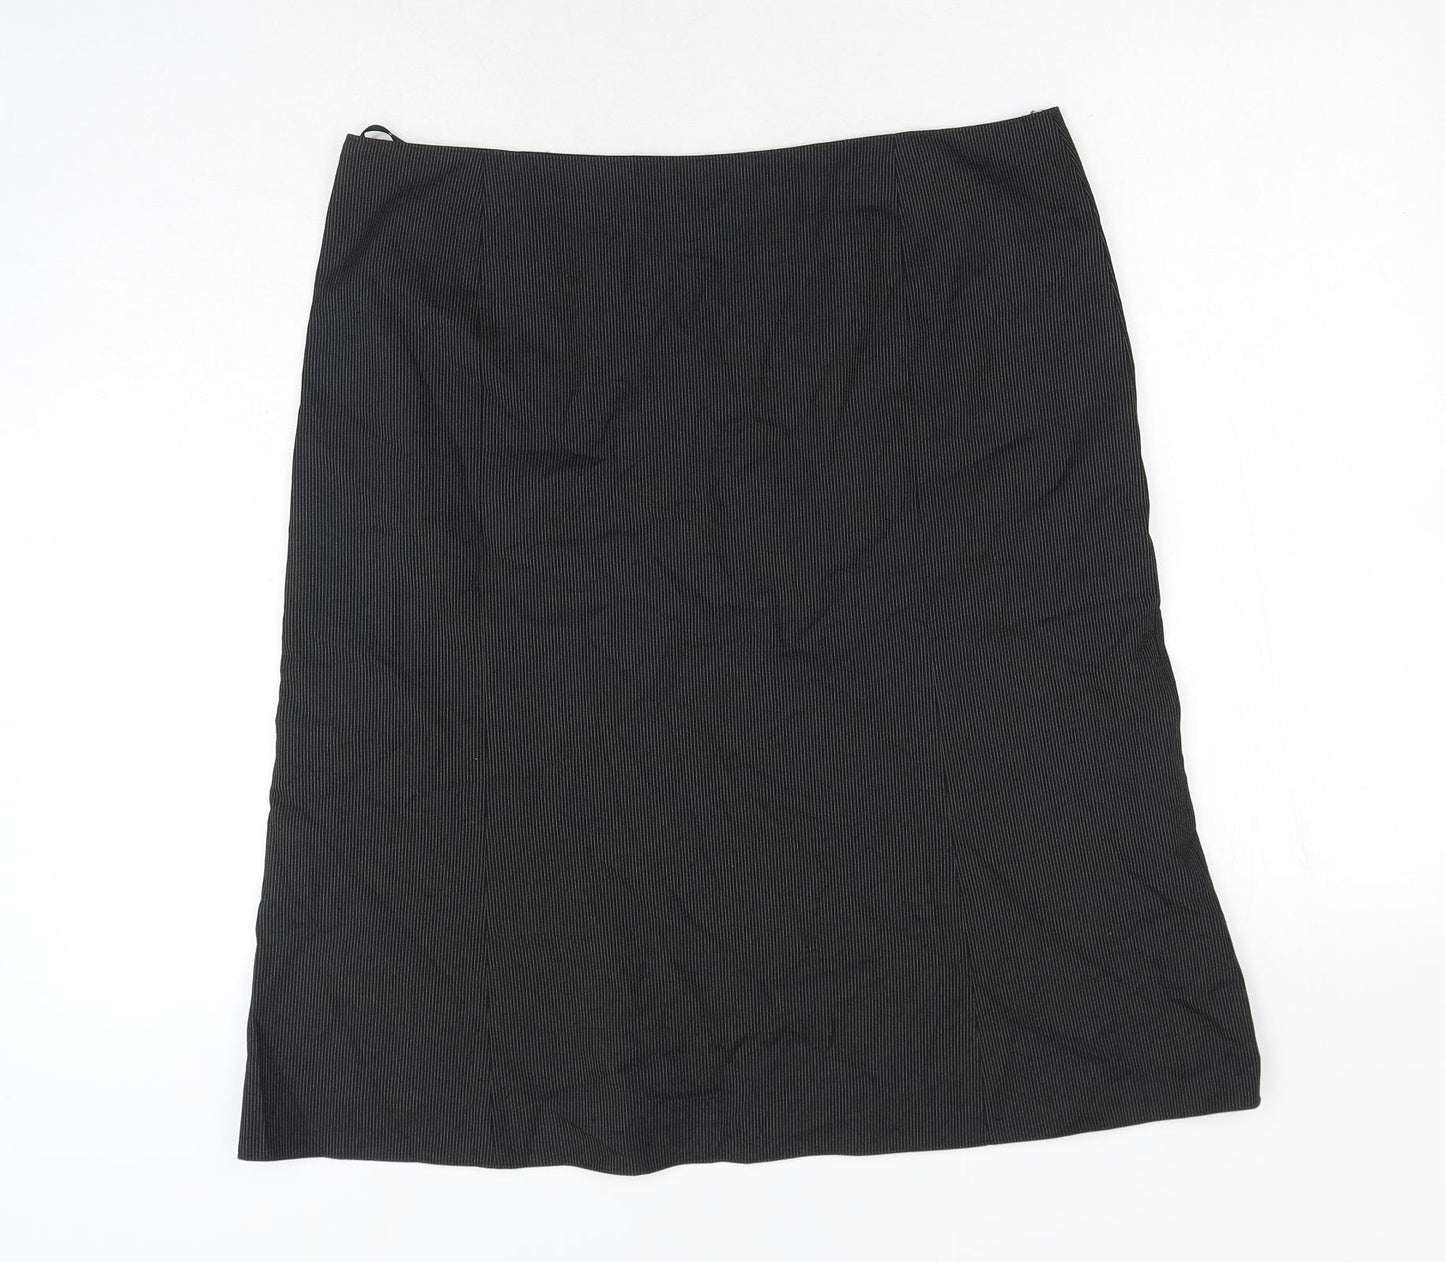 s.Oliver Womens Black Striped Polyester Mini Skirt Size 14 Zip